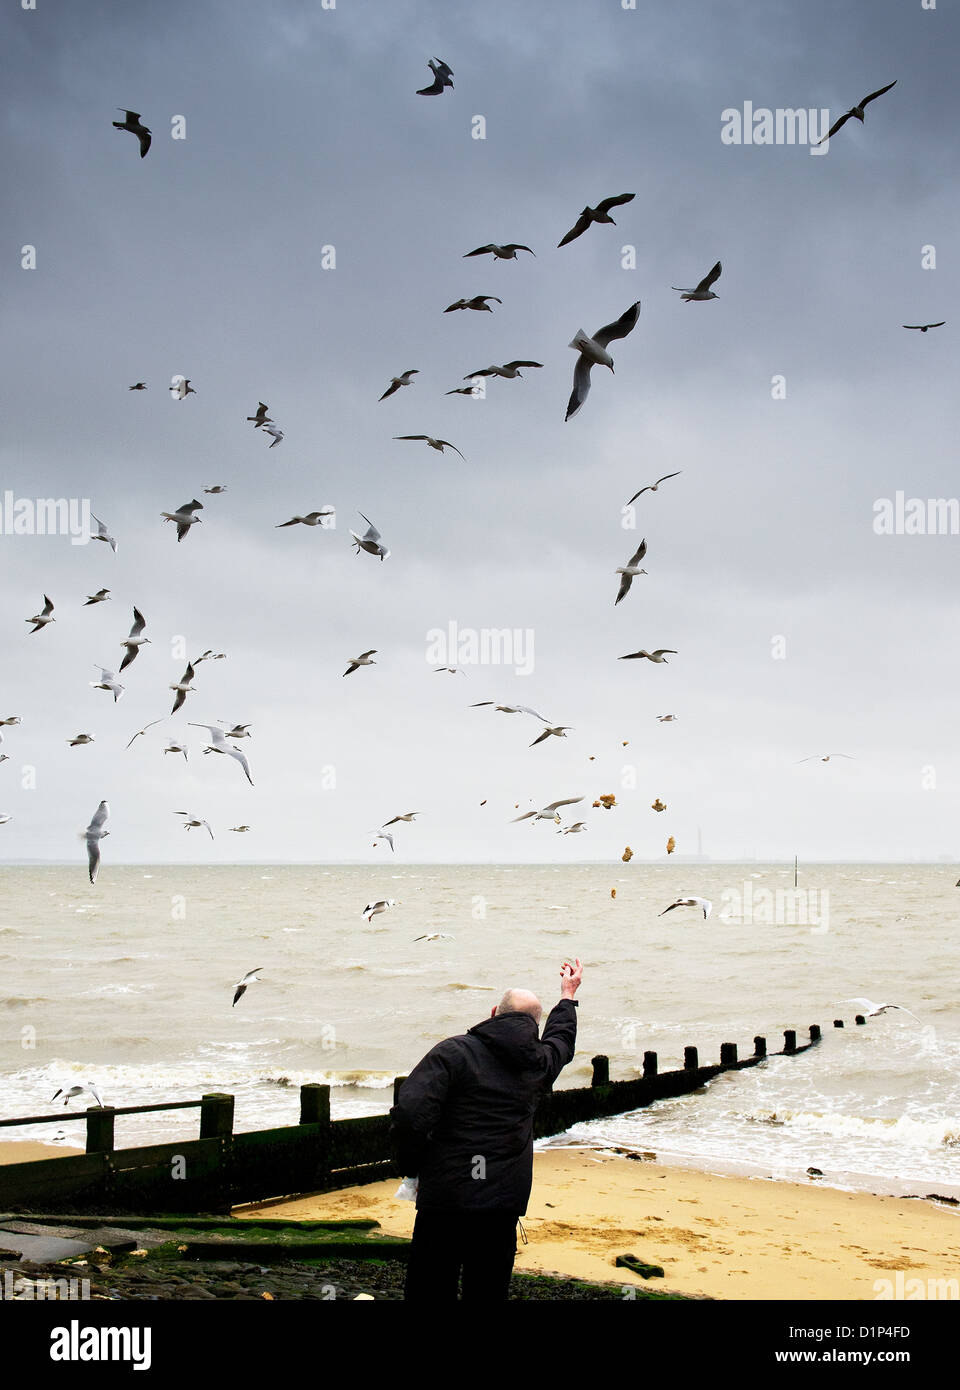 A man feeding bread to seagulls Stock Photo